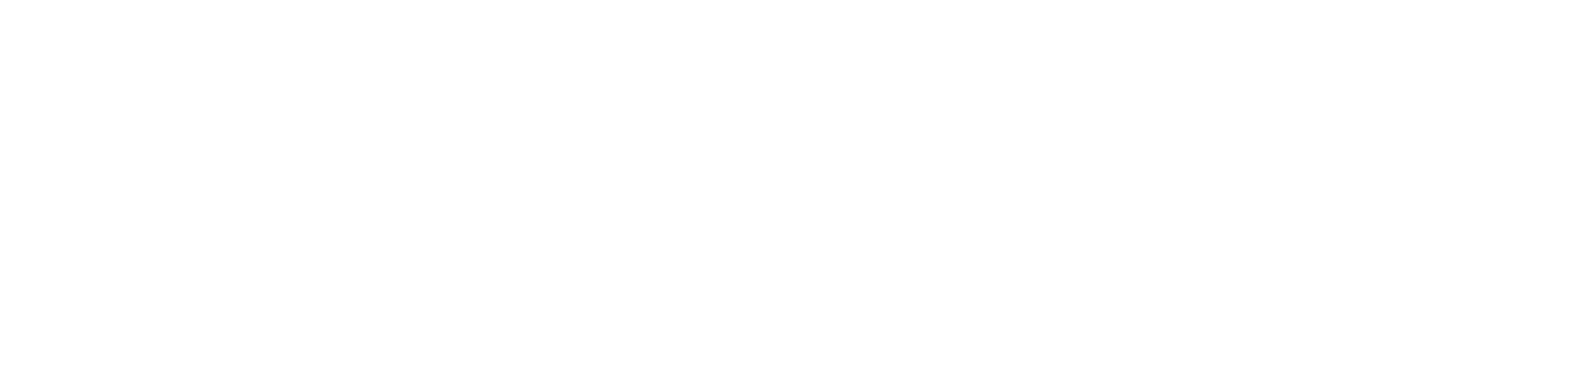 Fomento Económico Mexicano Logo für dunkle Hintergründe (transparentes PNG)